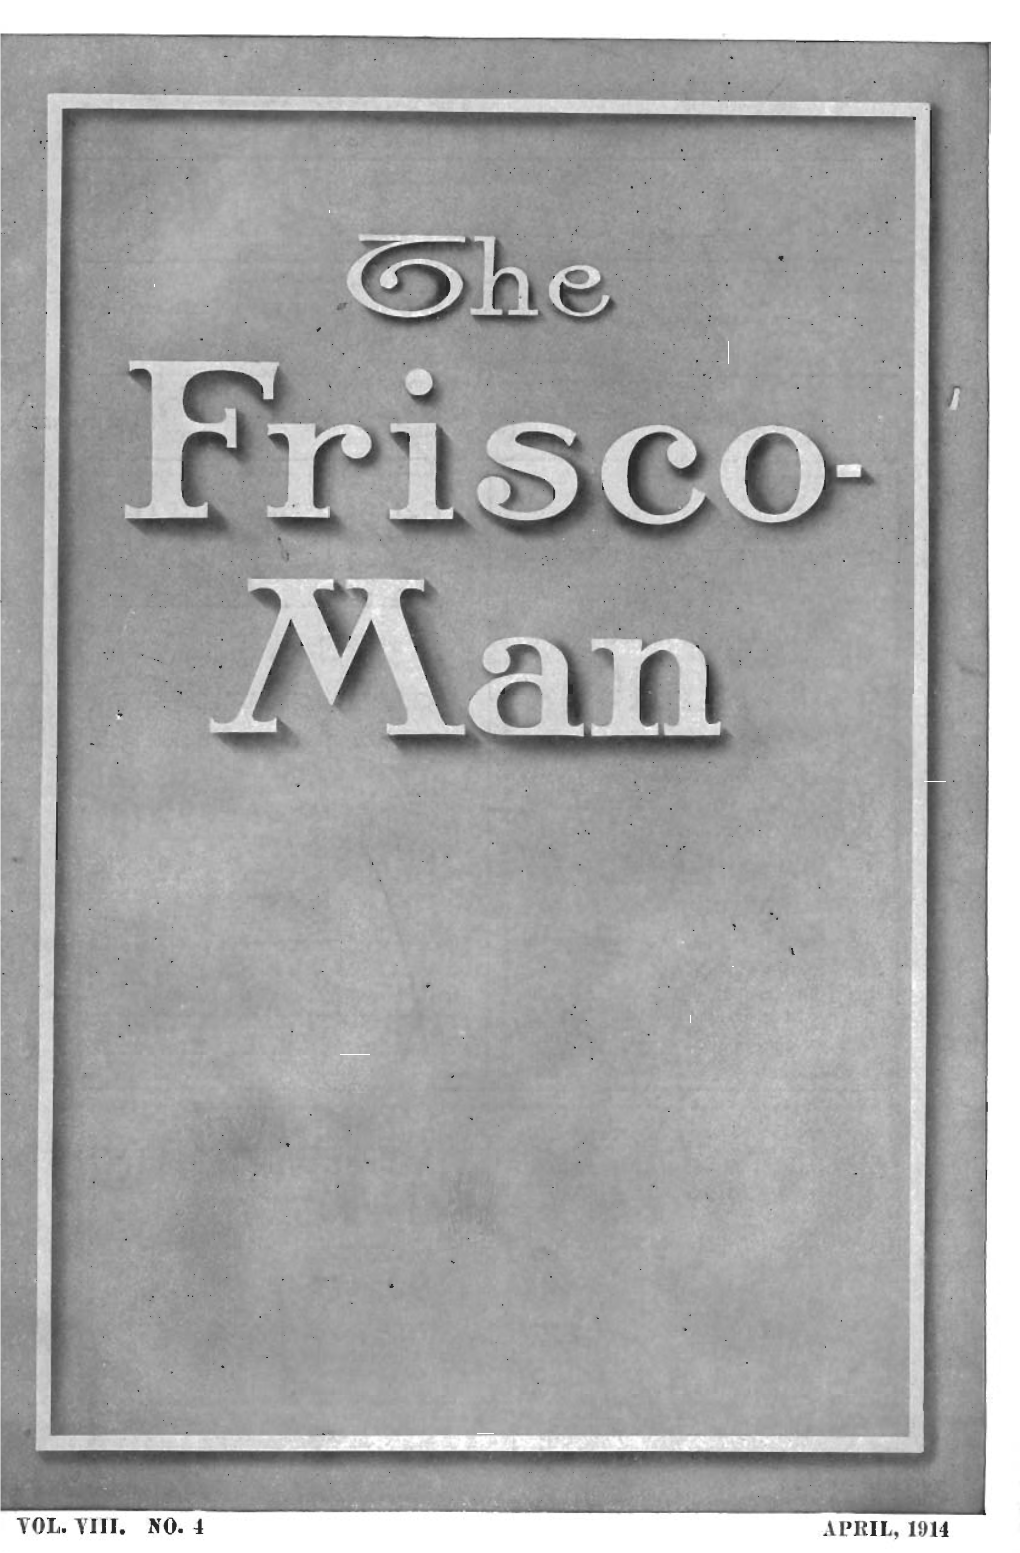 The Frisco-Man, April 1914